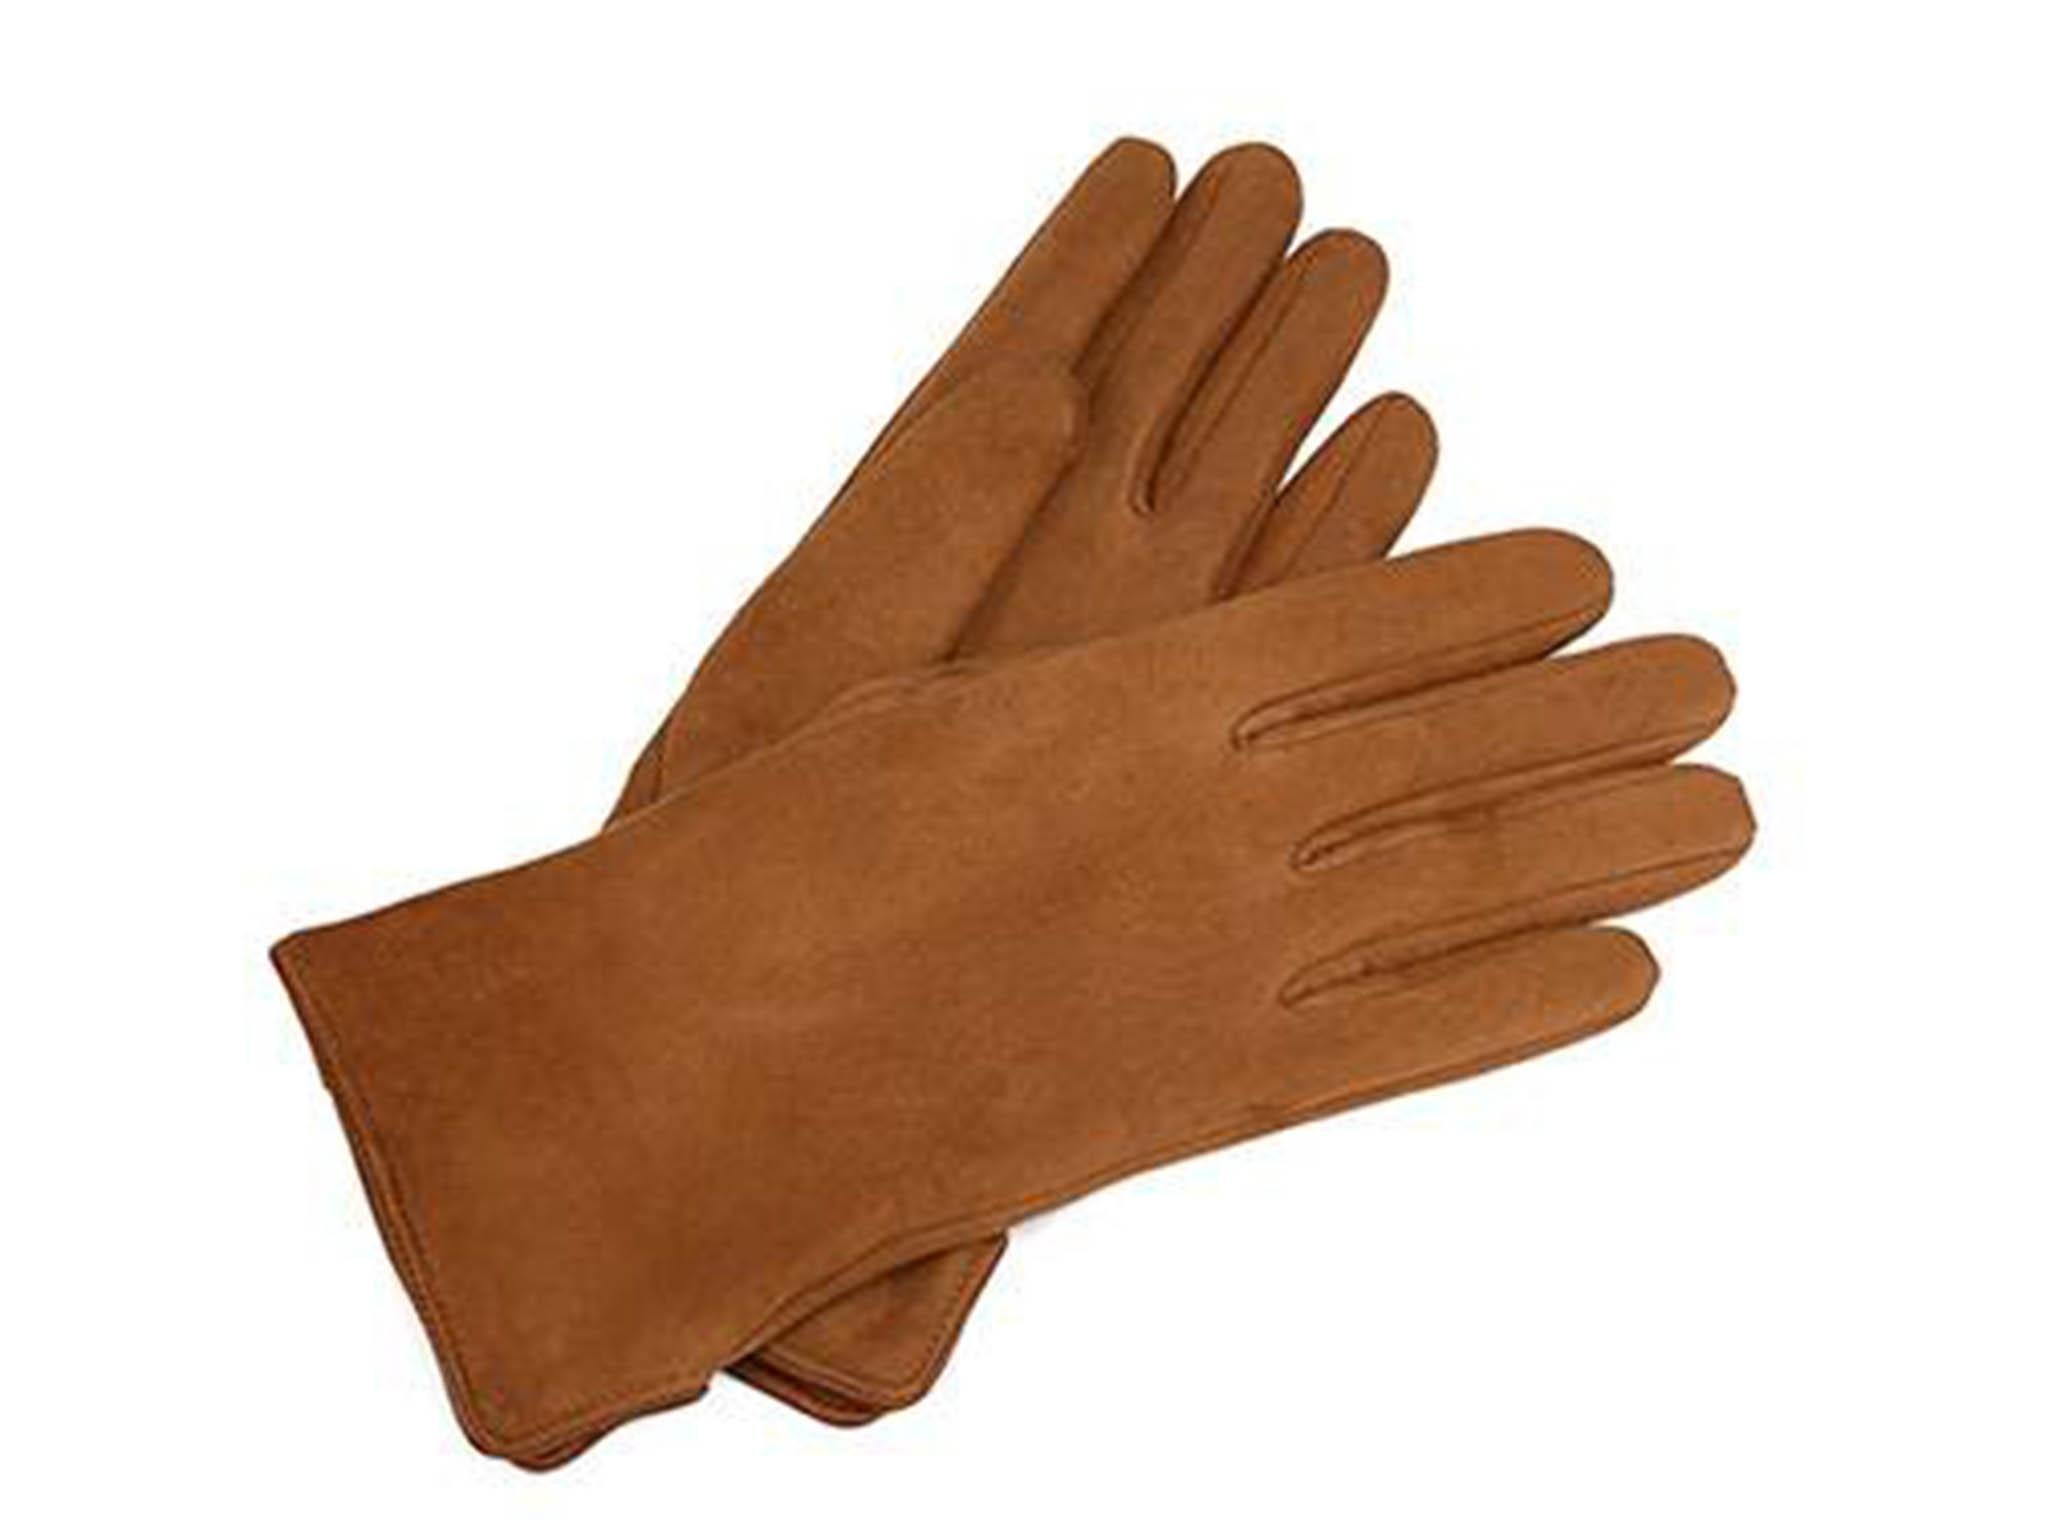 Ethnic Turkish Gloves Warm Winter Vintage Gloves 100% Natural Organic Wool Women Gloves Hand-Dyed With Madder Handmade knitted gloves Accessories Gloves & Mittens Winter Gloves 